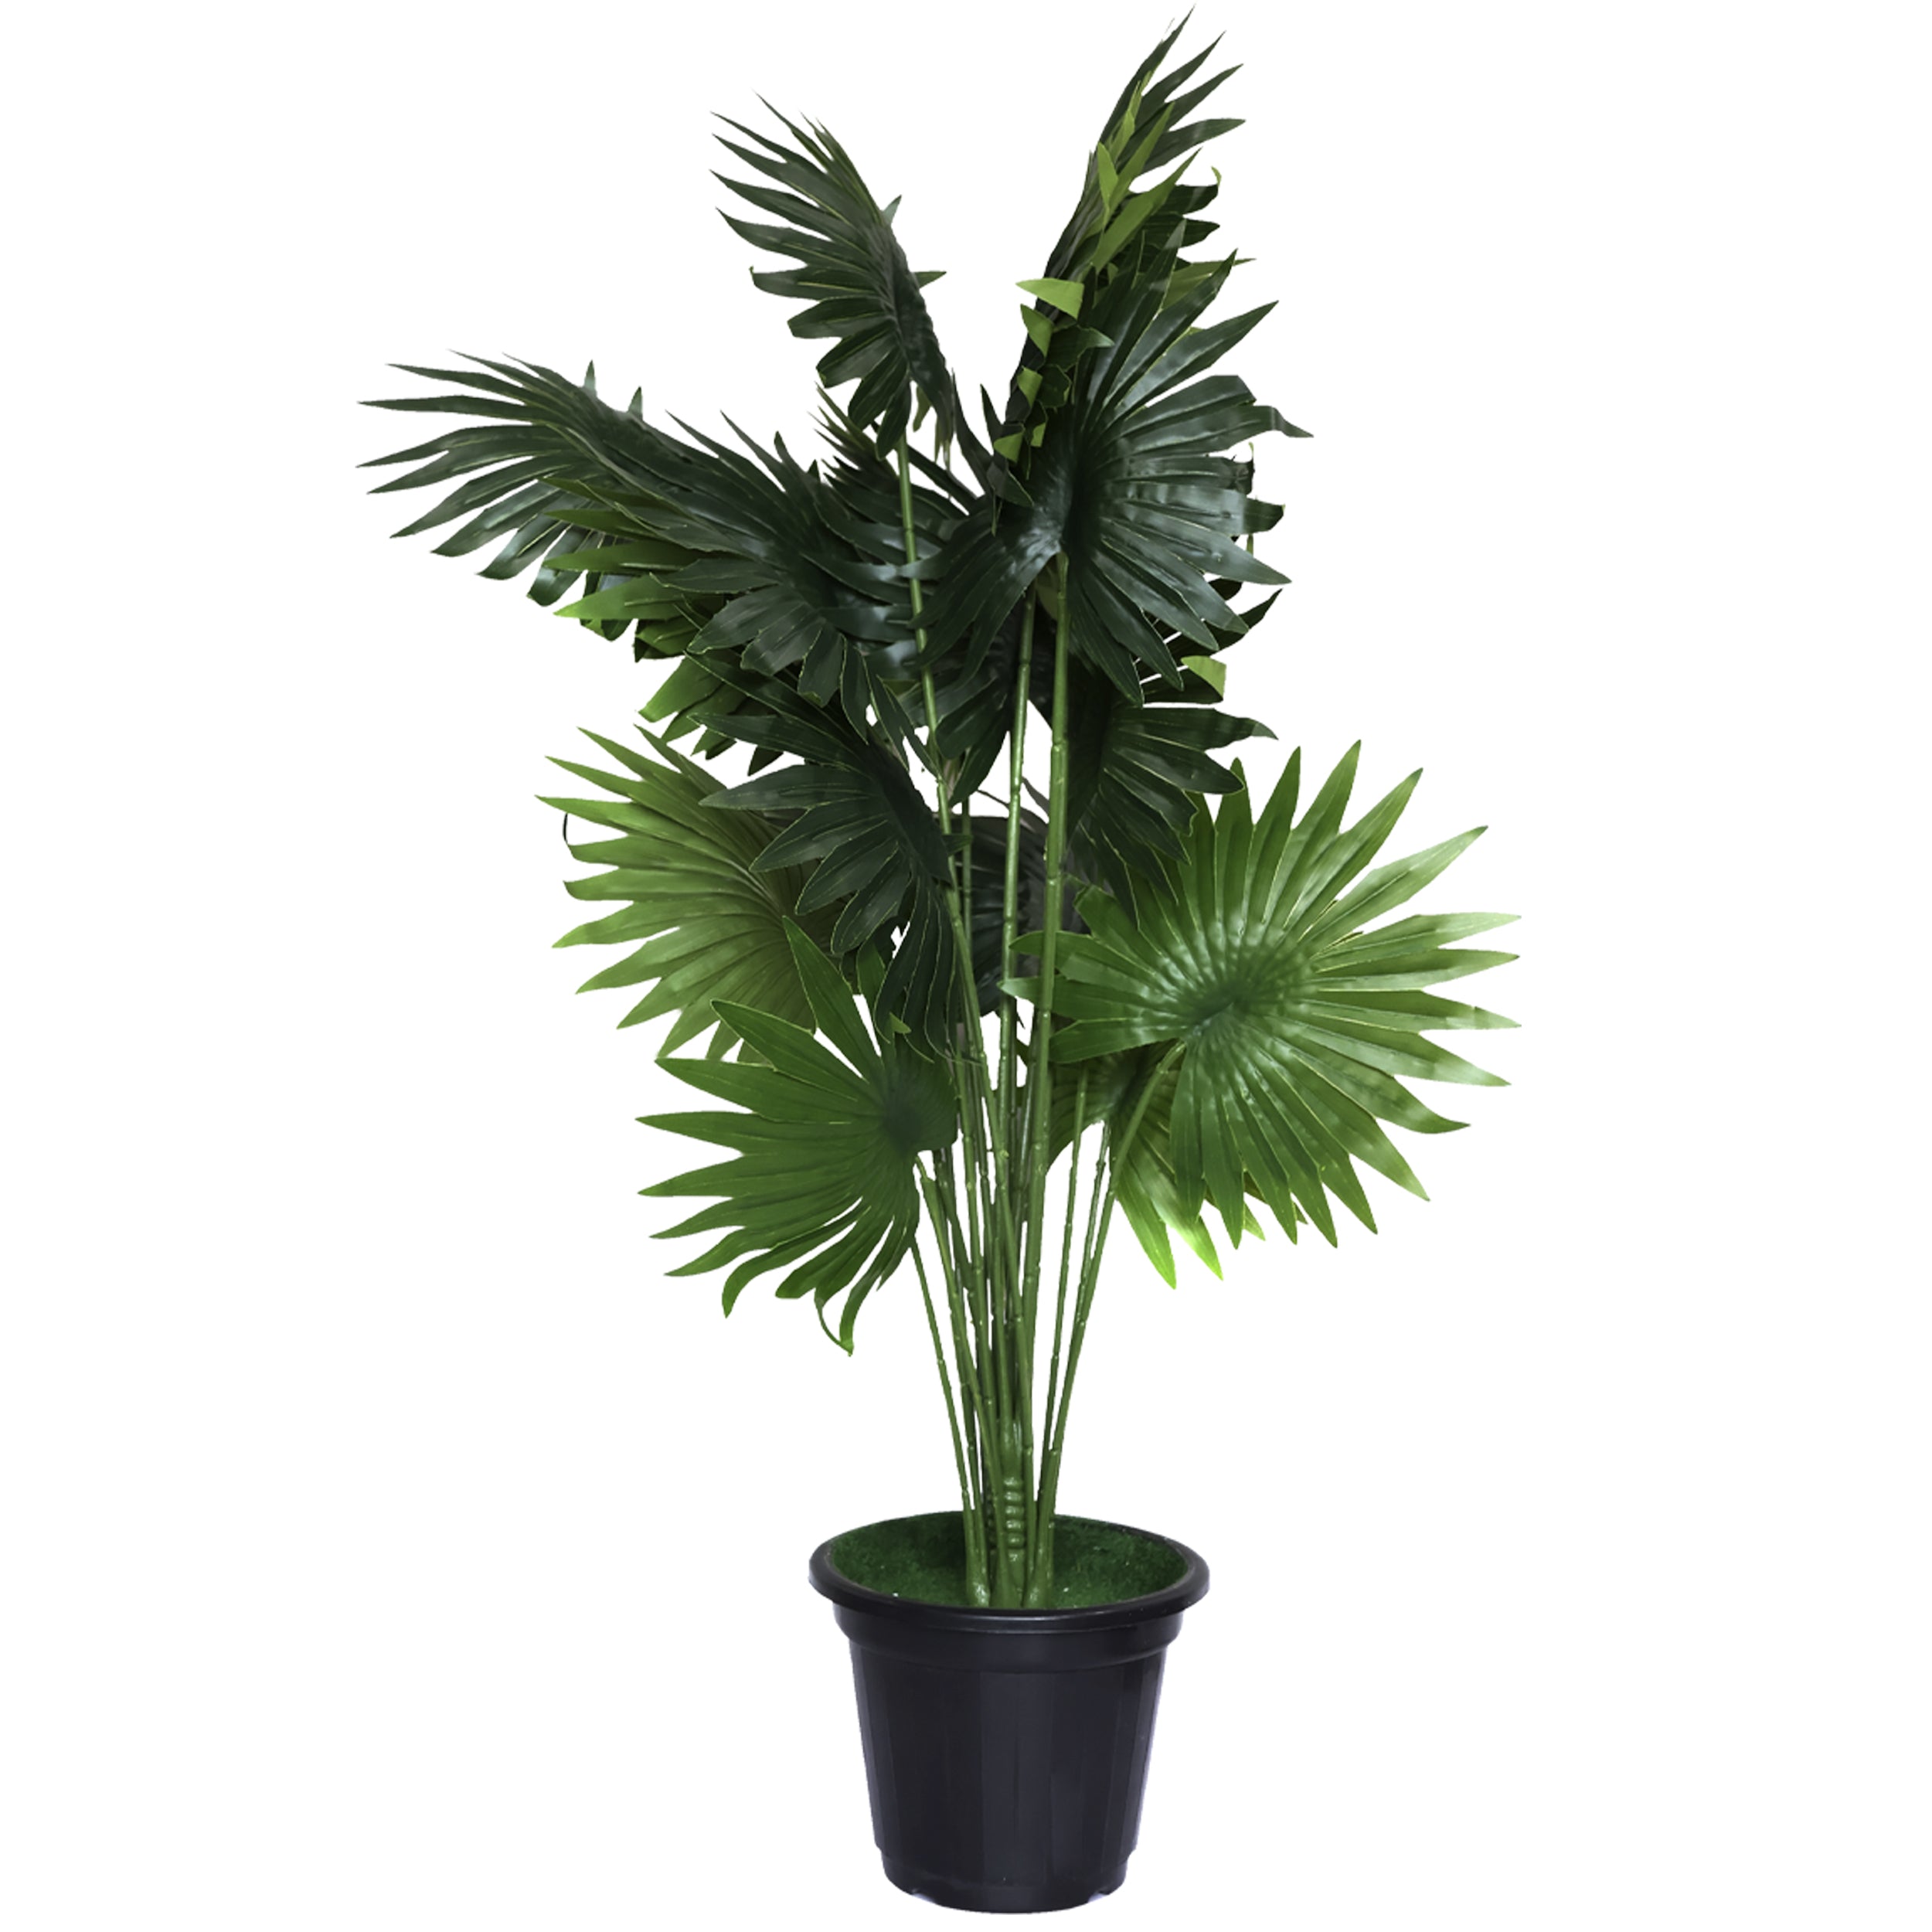 AAVANA GREENS 30" Floret Artificial Fan Palm with Basic Black Pot, Home Décor, Office Decor Indoor Green Plant